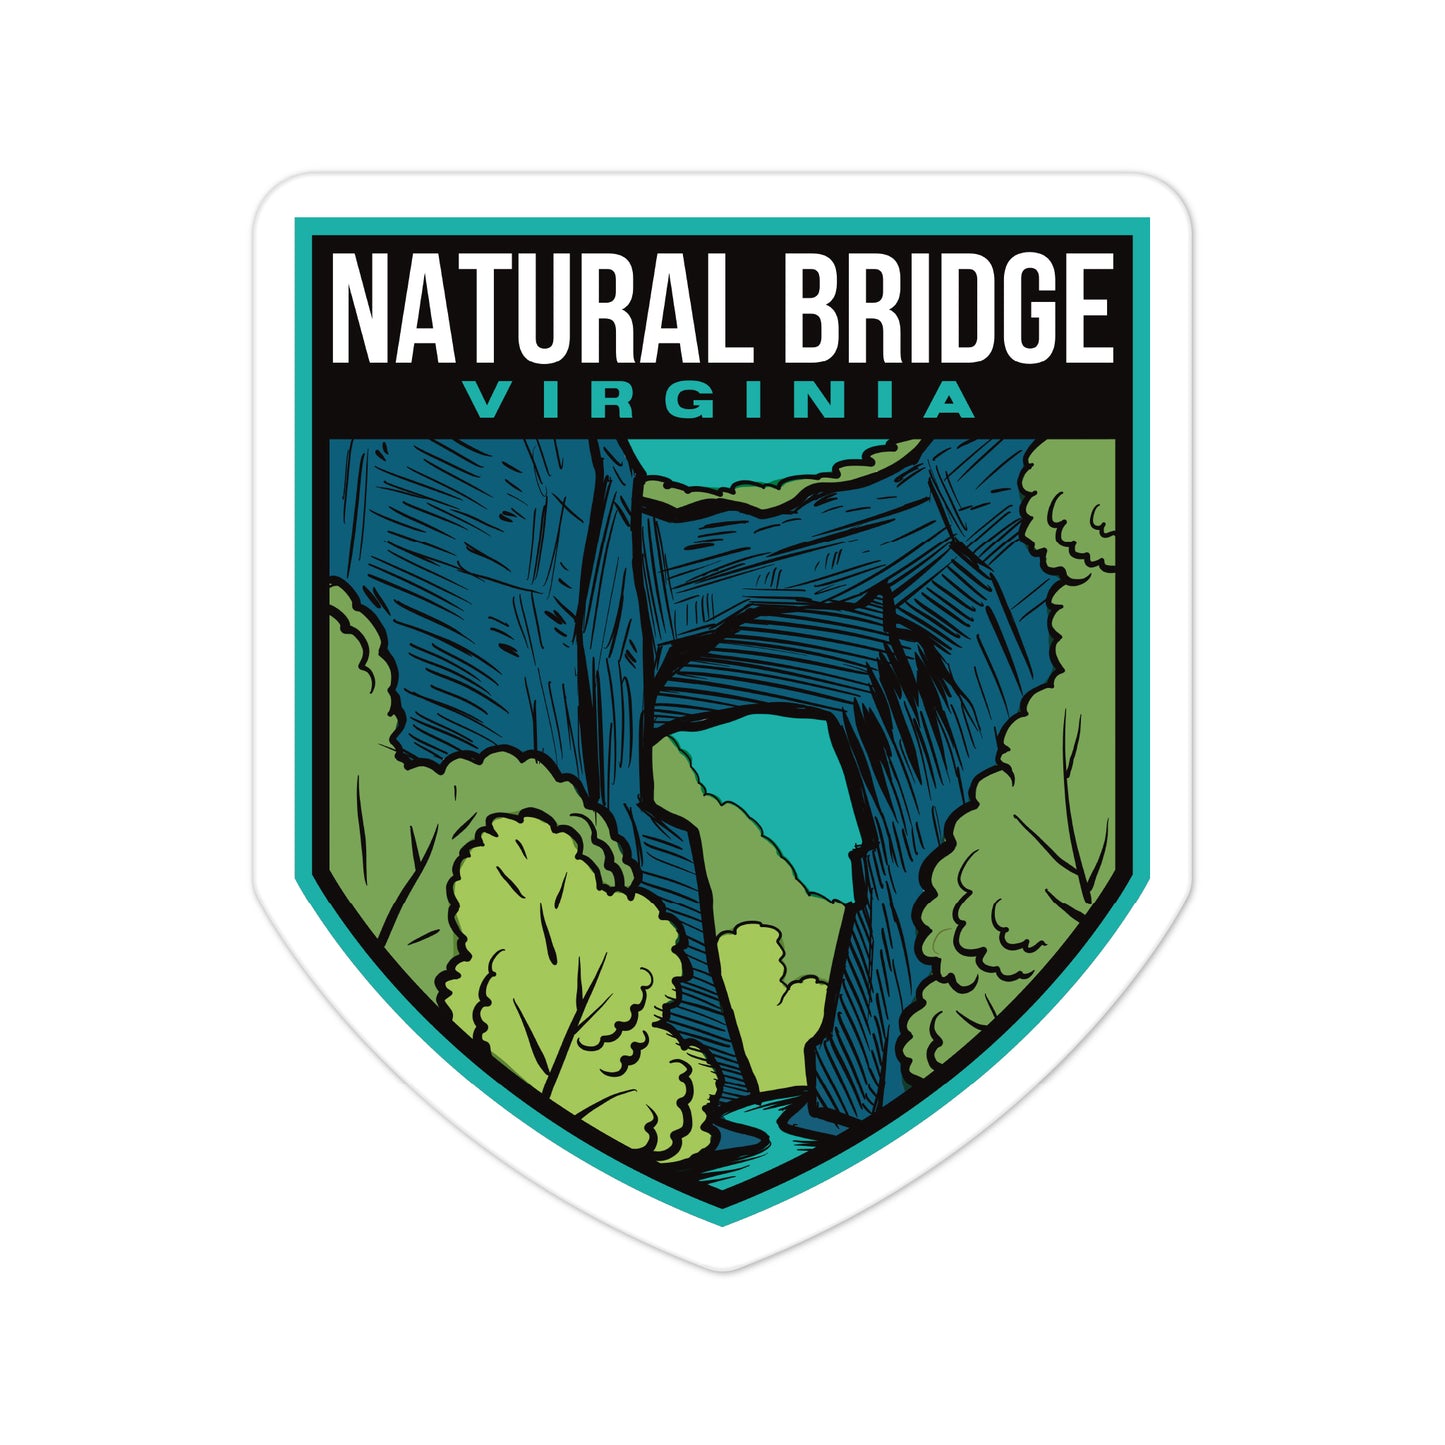 A sticker of Natural Bridge Virginia